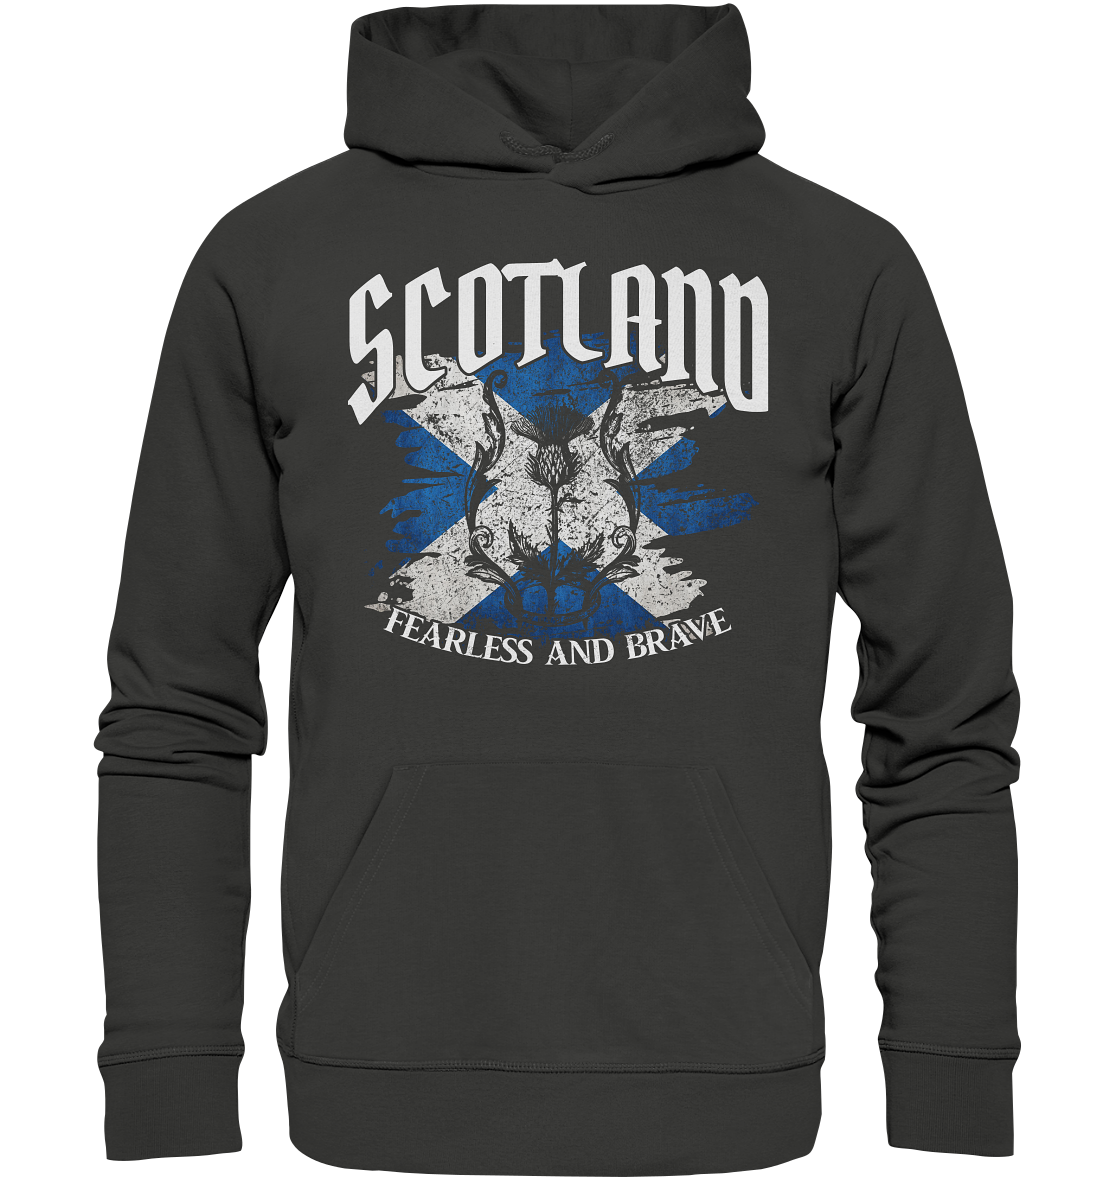 Scotland "Fearless and Brave / Splatter" - Premium Unisex Hoodie